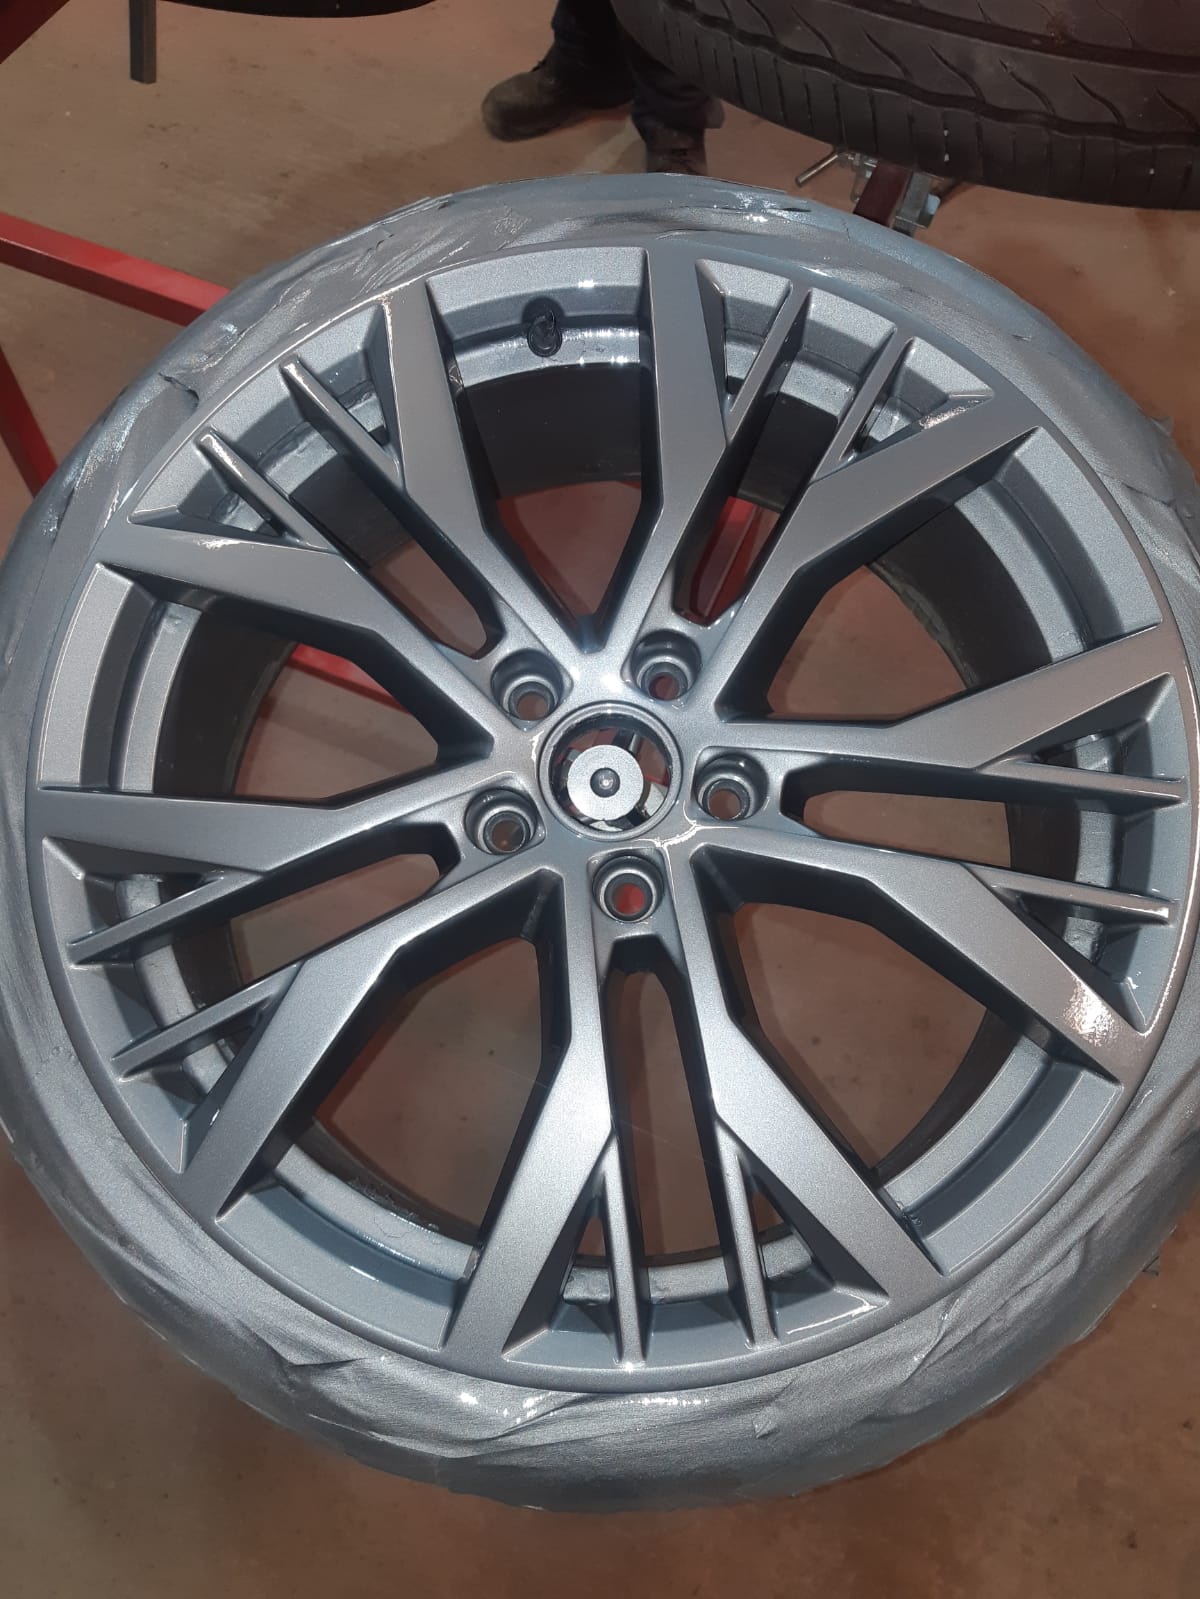 Spray painted alloy wheel